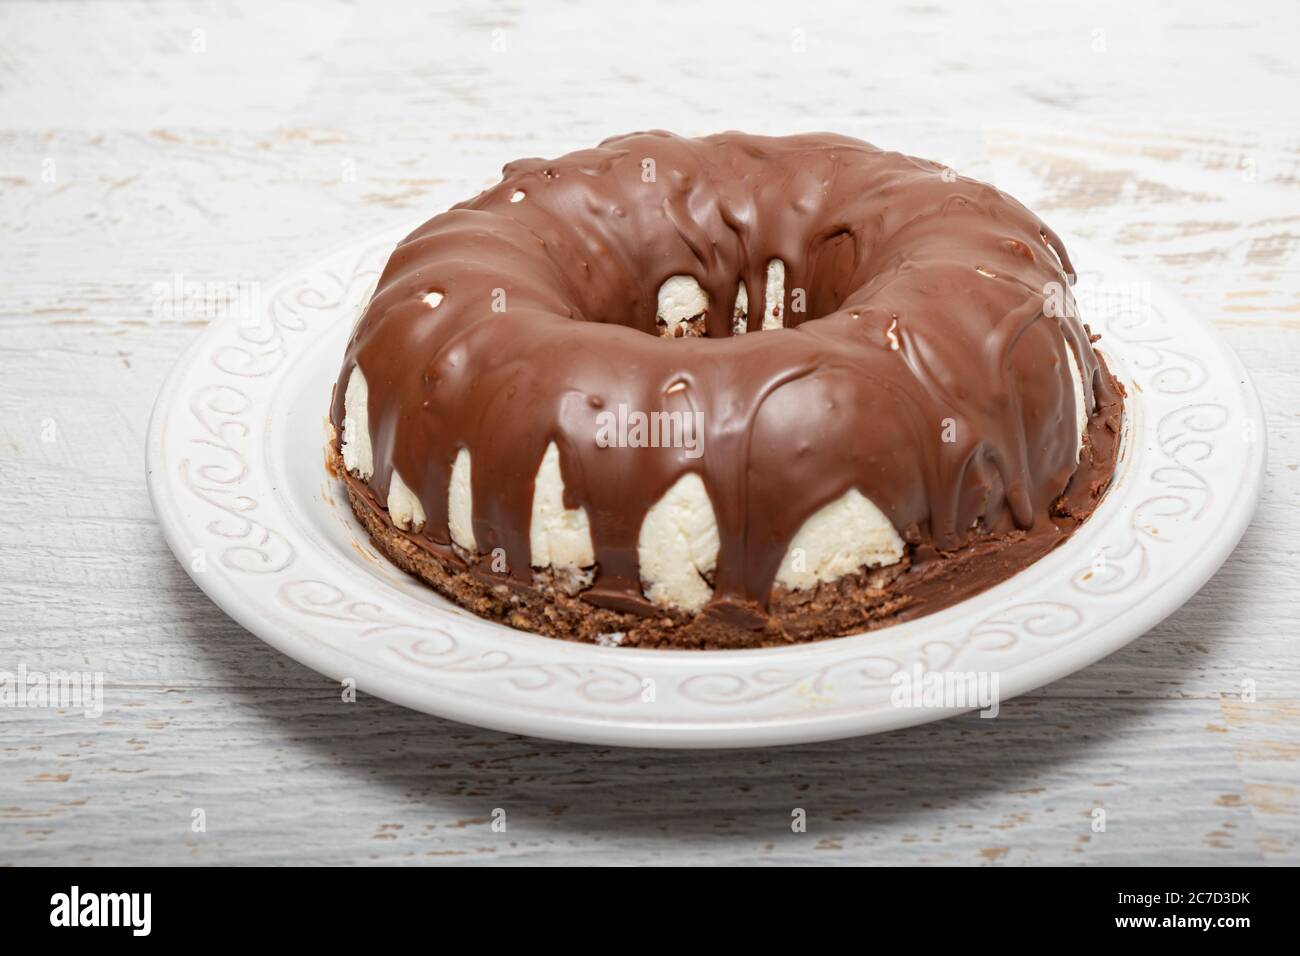 Chocolate and coconut bundt cake Stock Photo